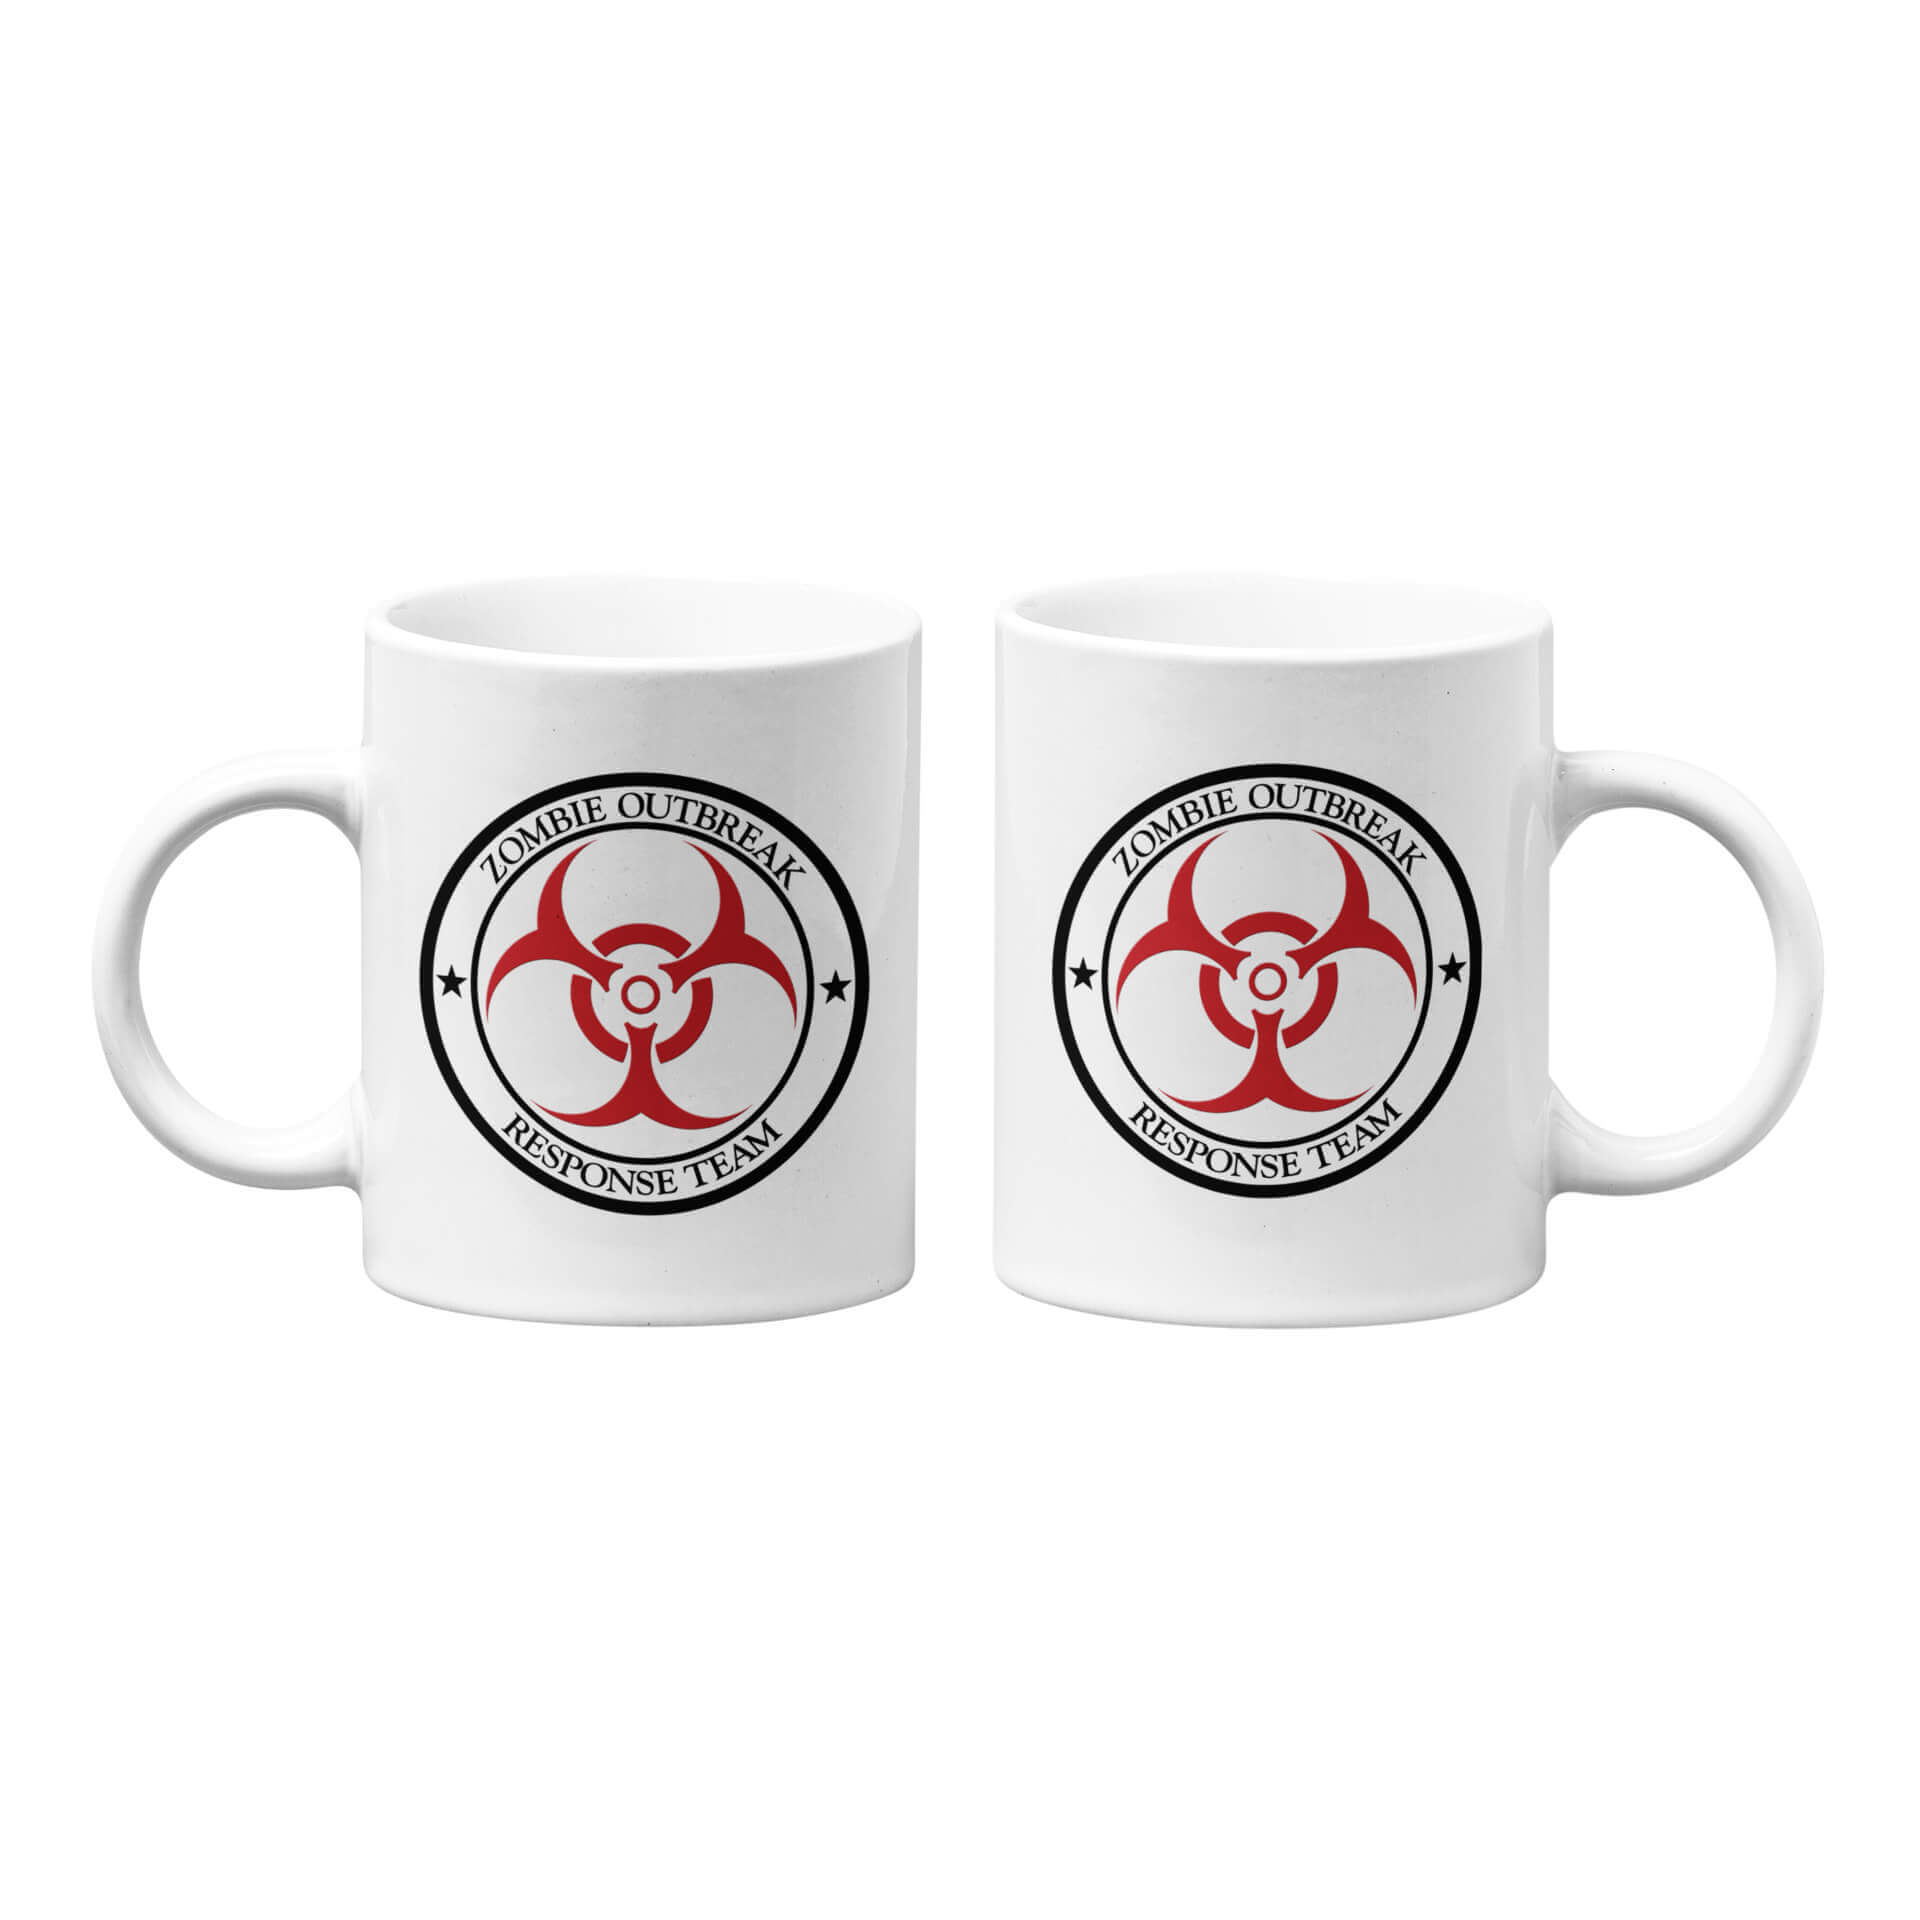 Zombie Outbreak Response Team Mug